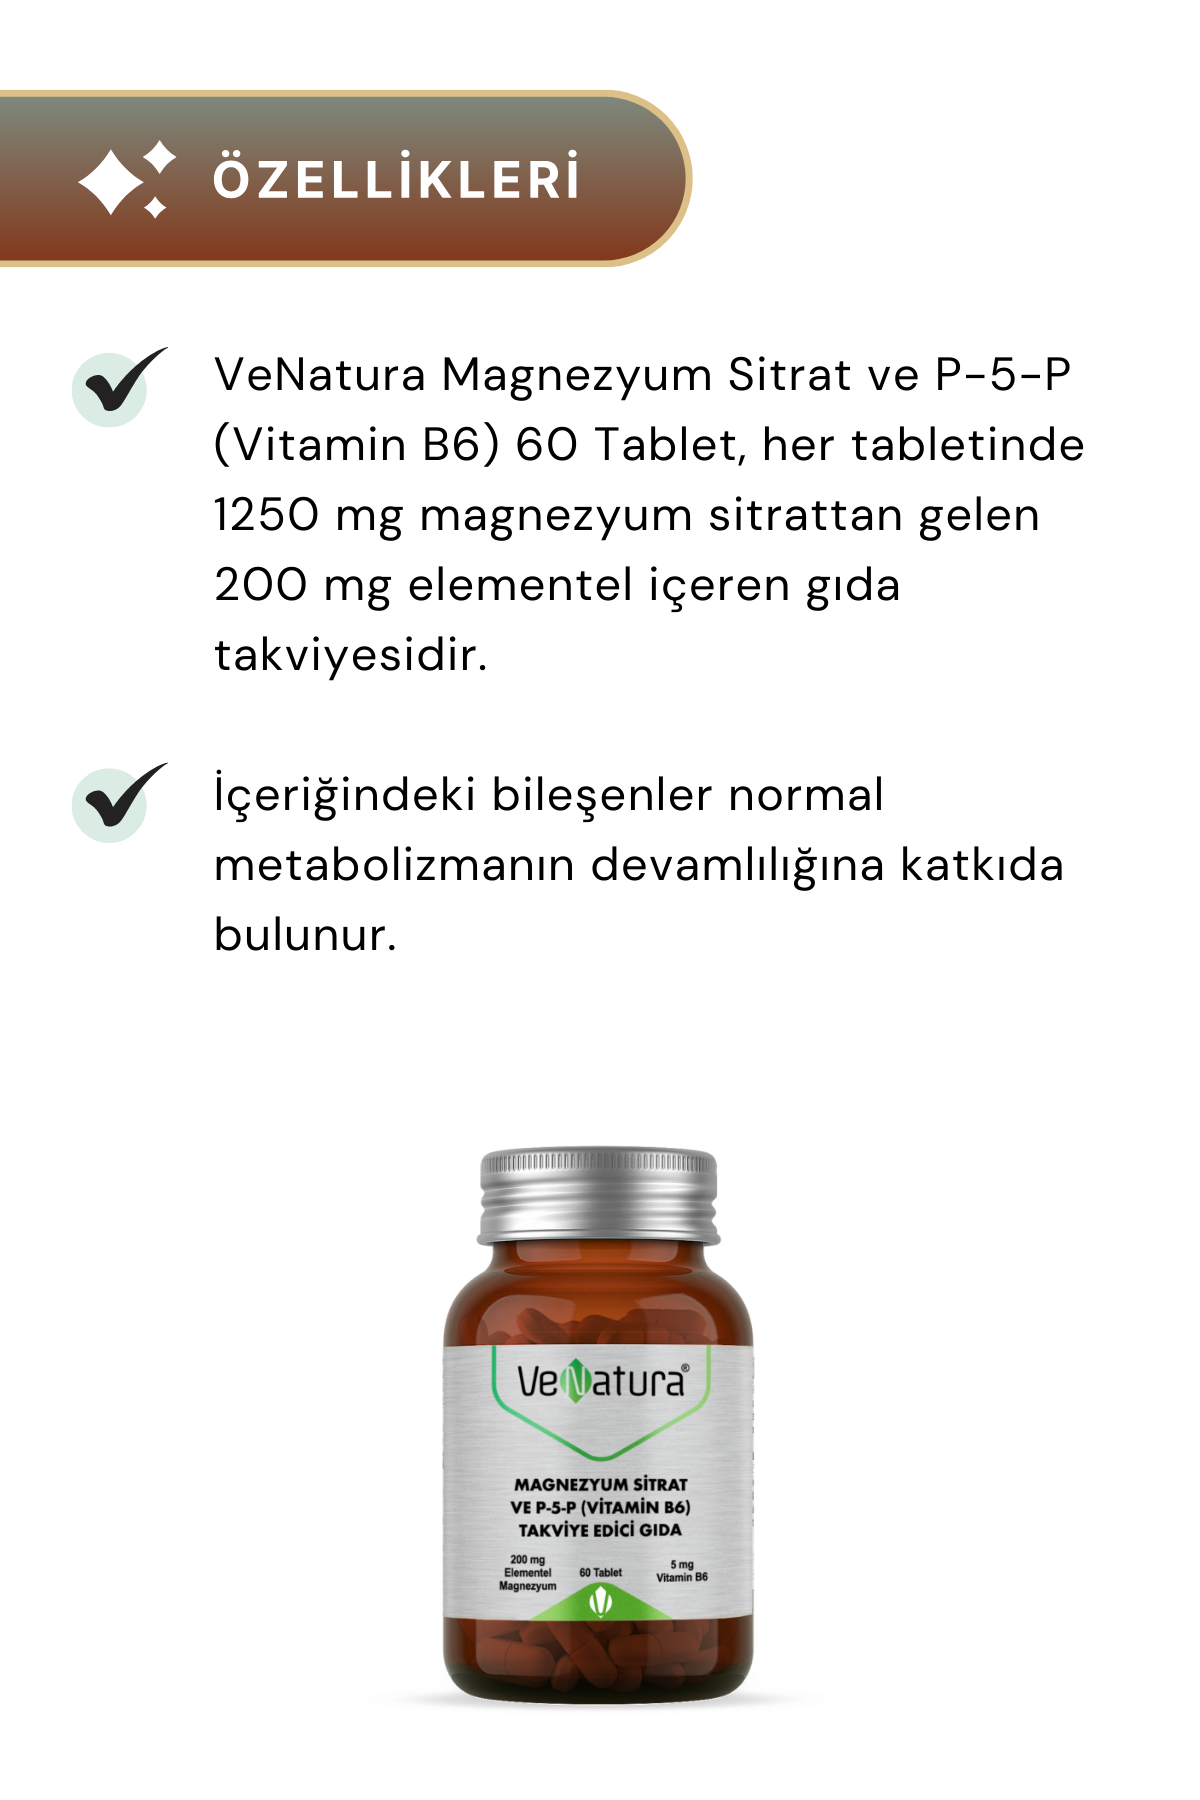 VeNatura Magnezyum Sitrat ve P-5-P (Vitamin B6) 60 Tablet 3'lü Paket